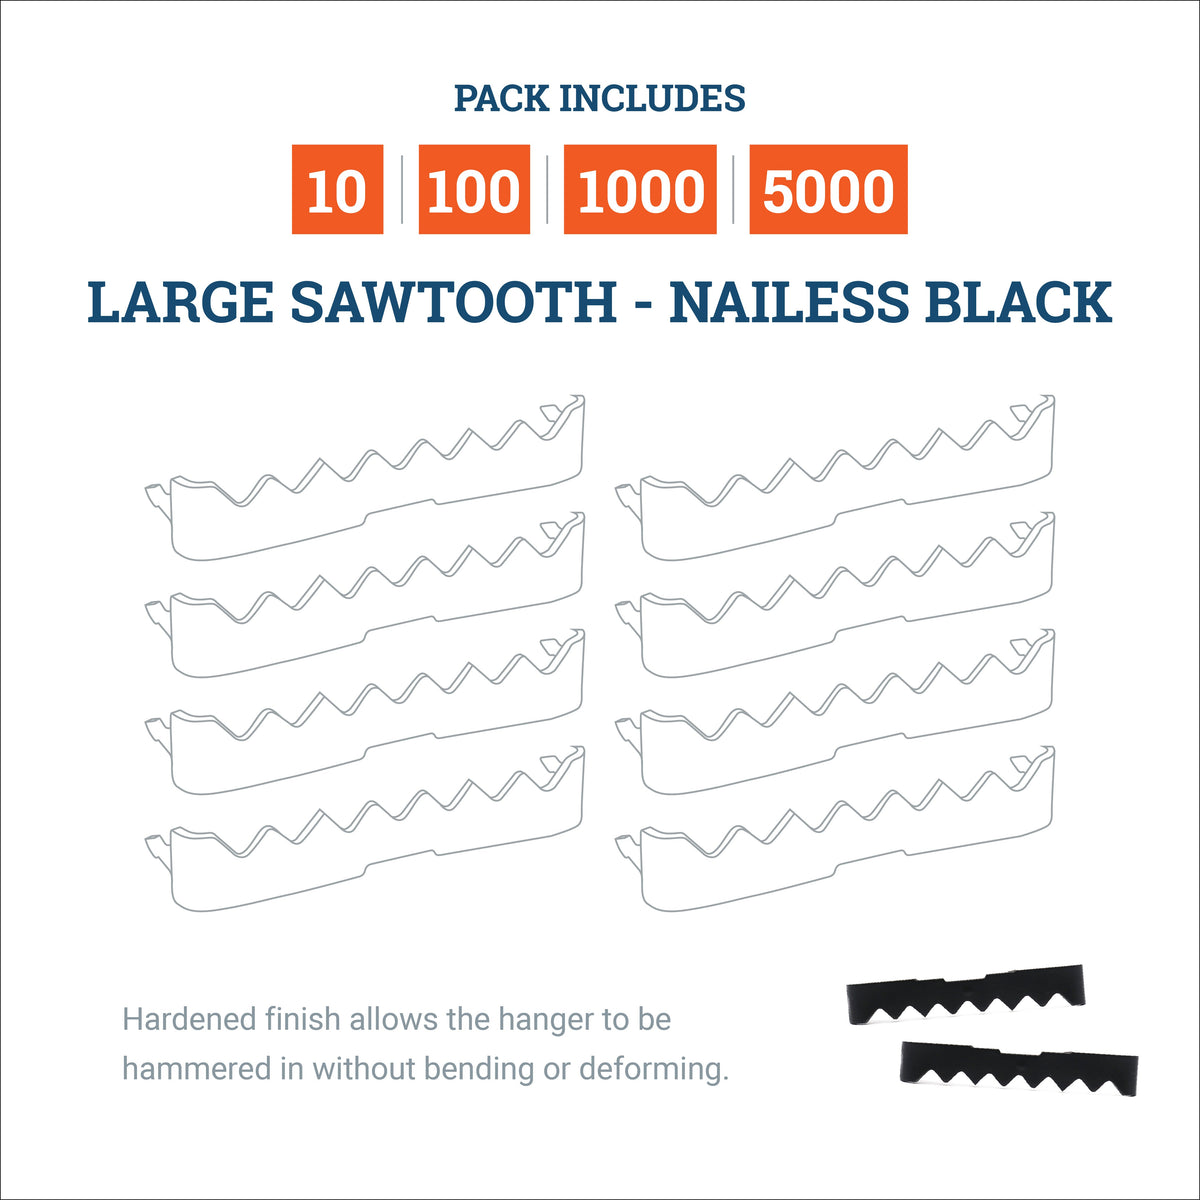 Large Sawtooth Nailess Black